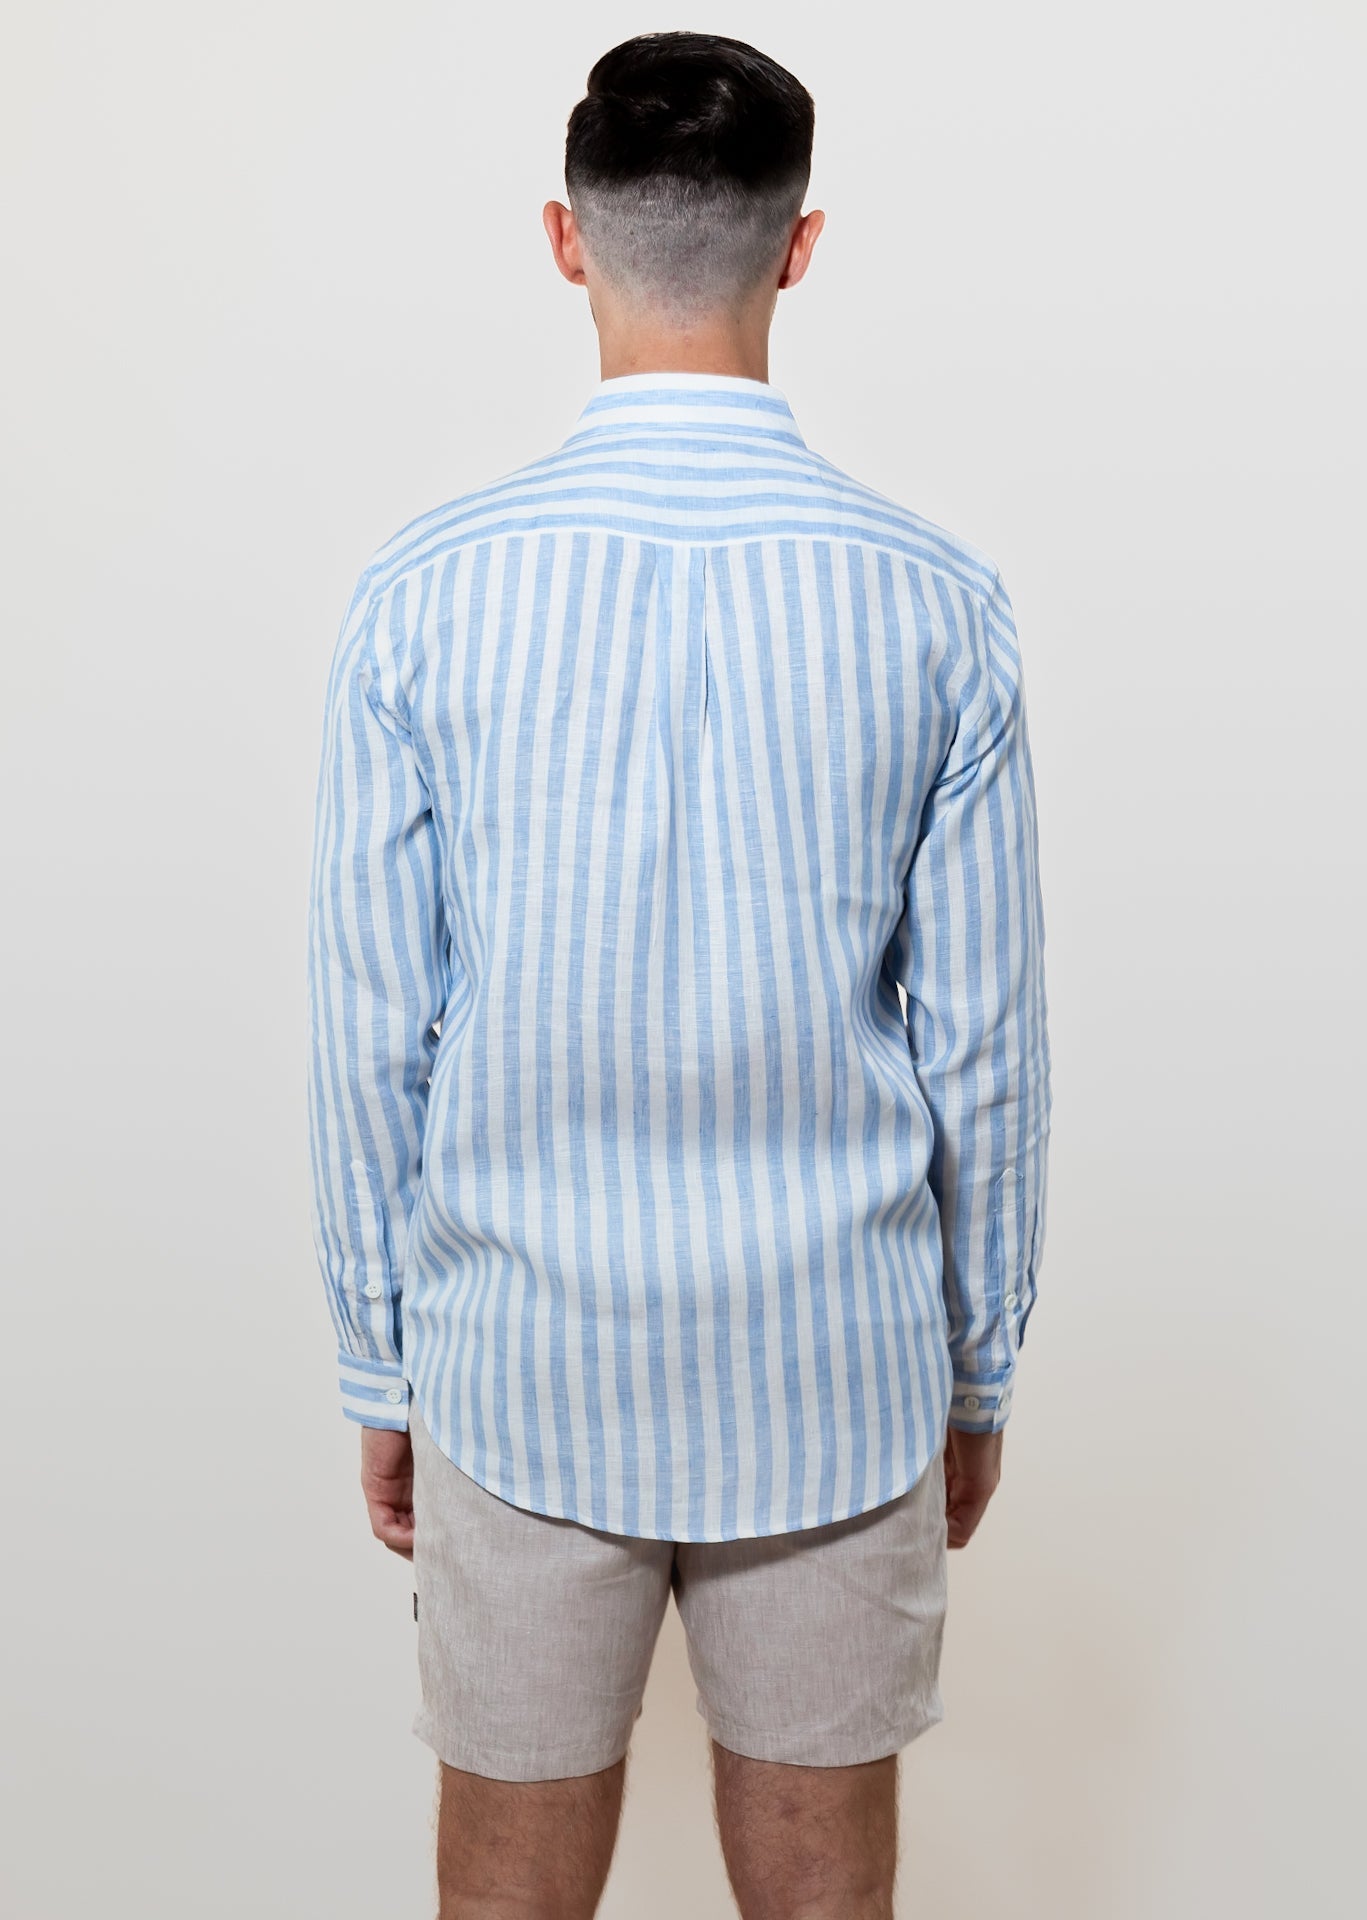 Yacht Club - Long Sleeve Italian Stripe Linen Shirt - Mr. Linen Co Mr. Linen CO